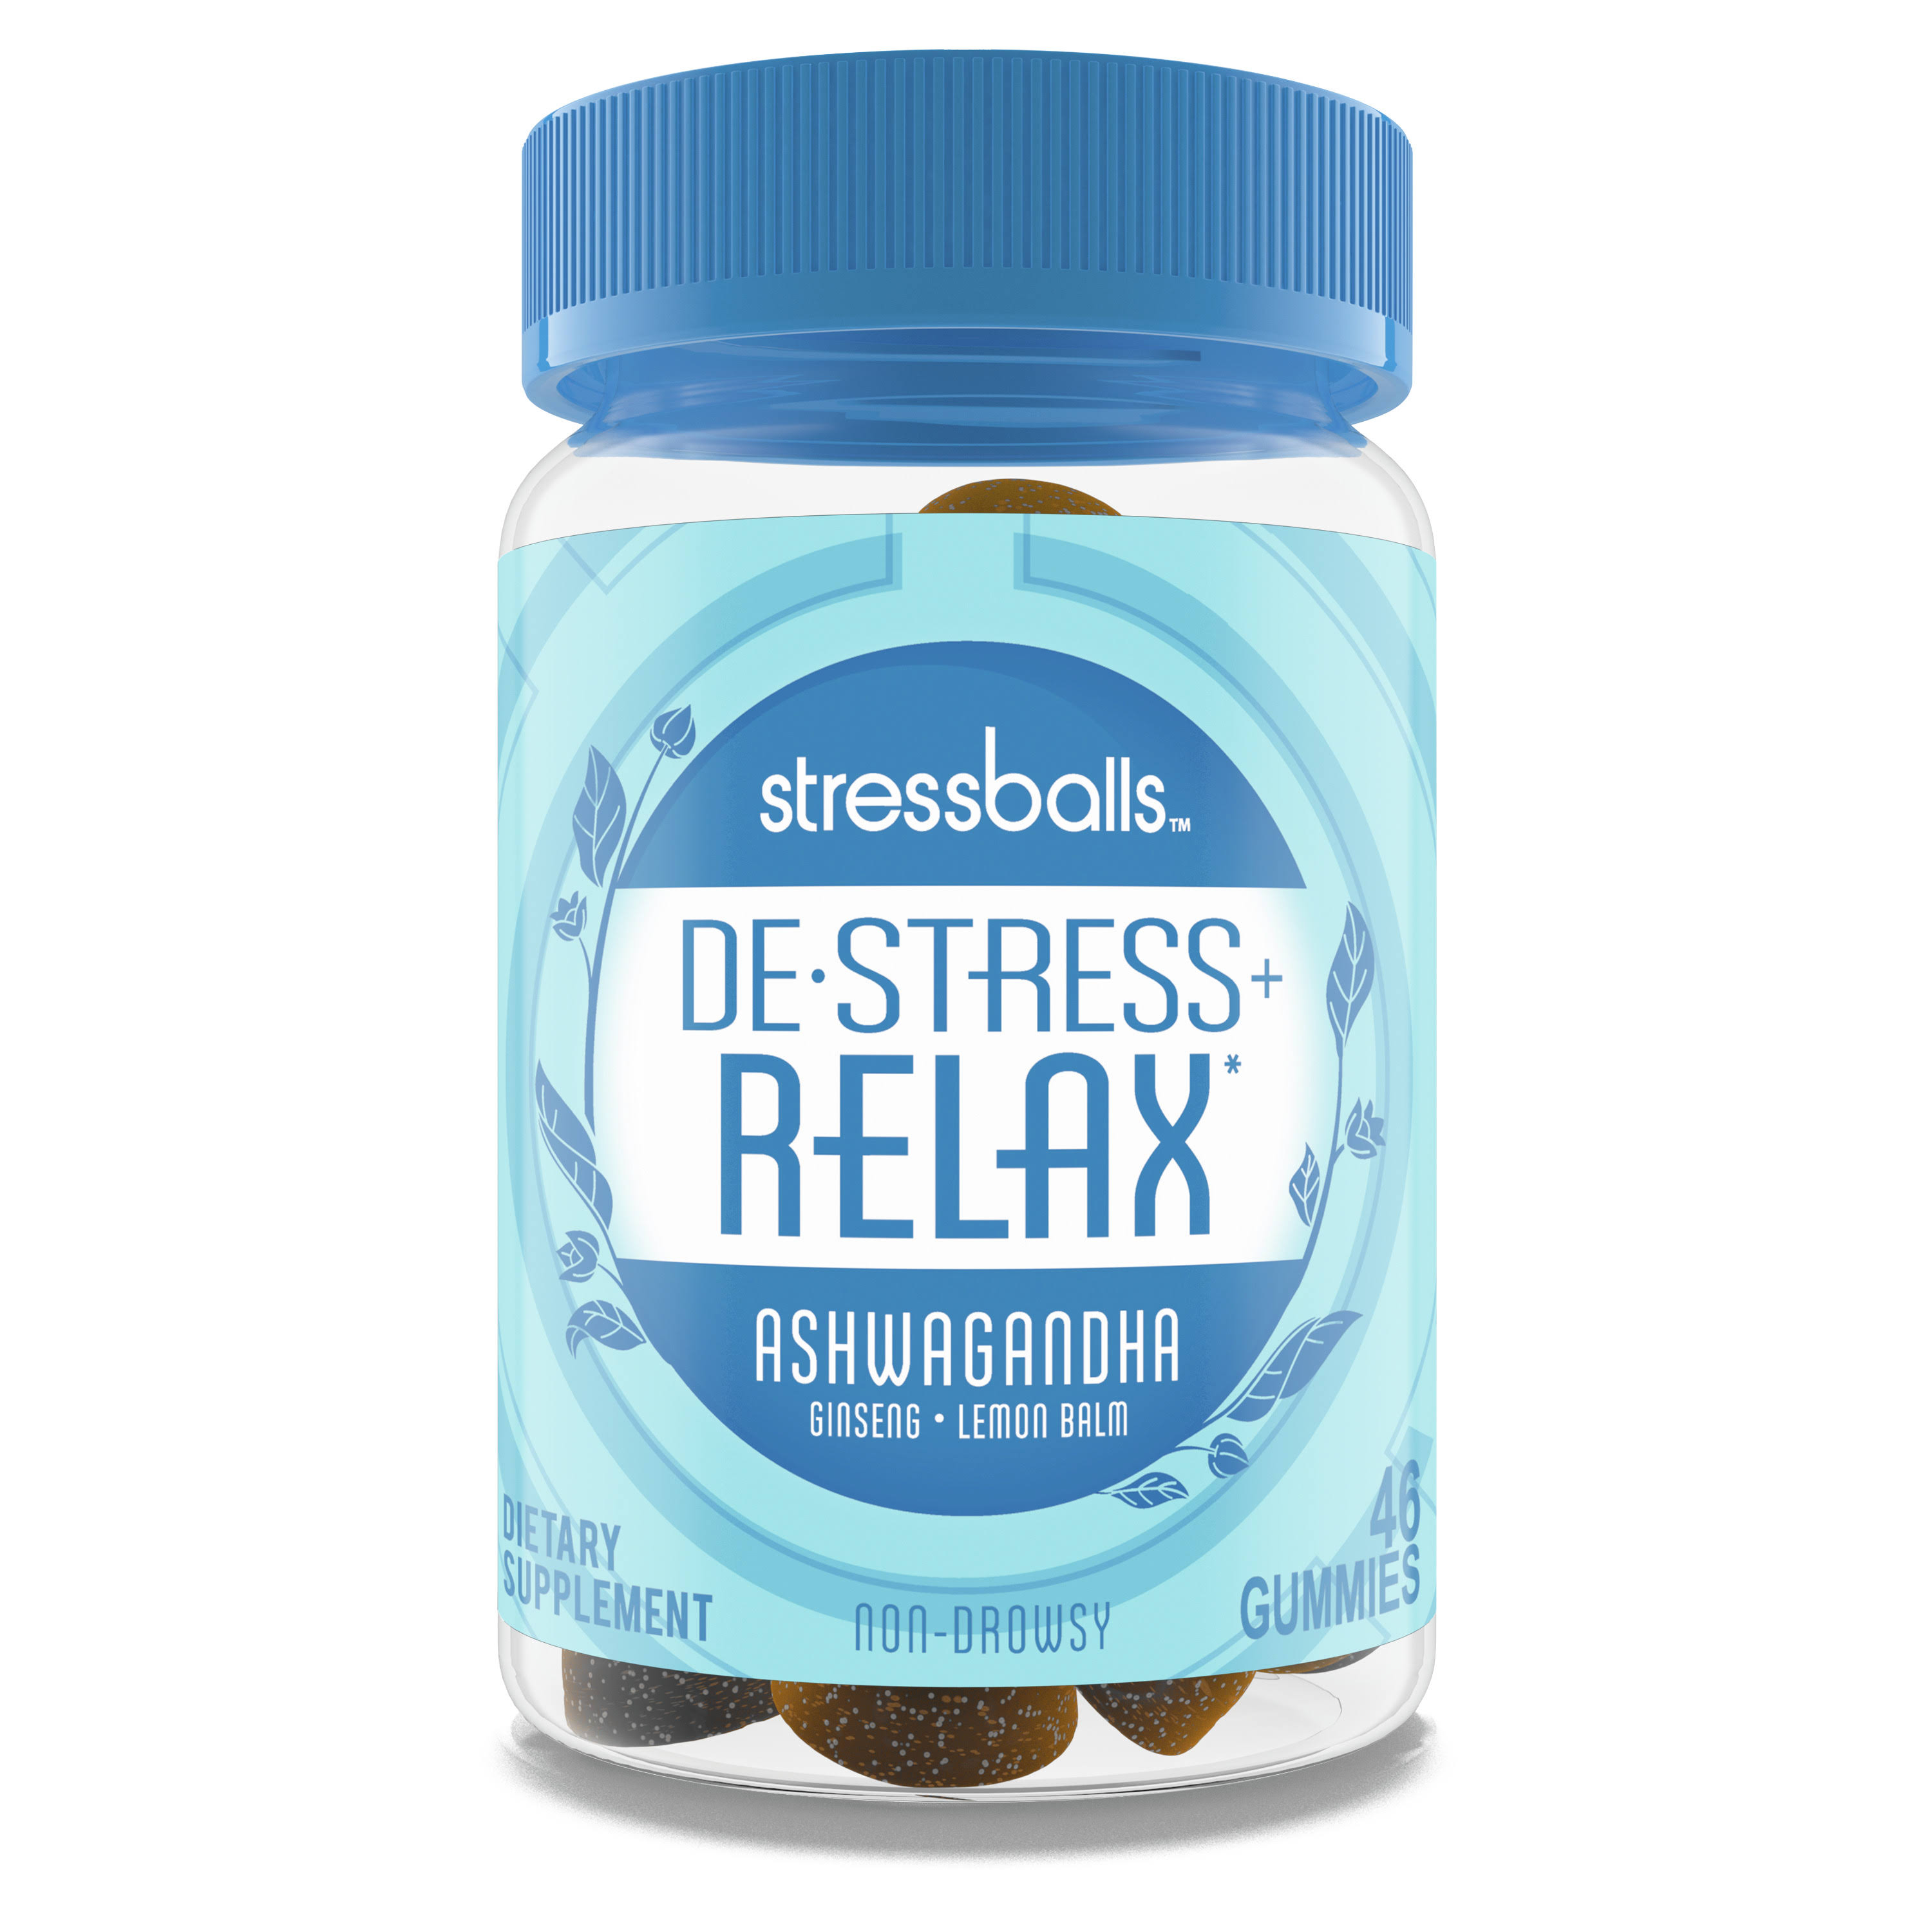 Stressballs, De-Stress + Relax, with Ashwagandha for Stress Relief, Gi